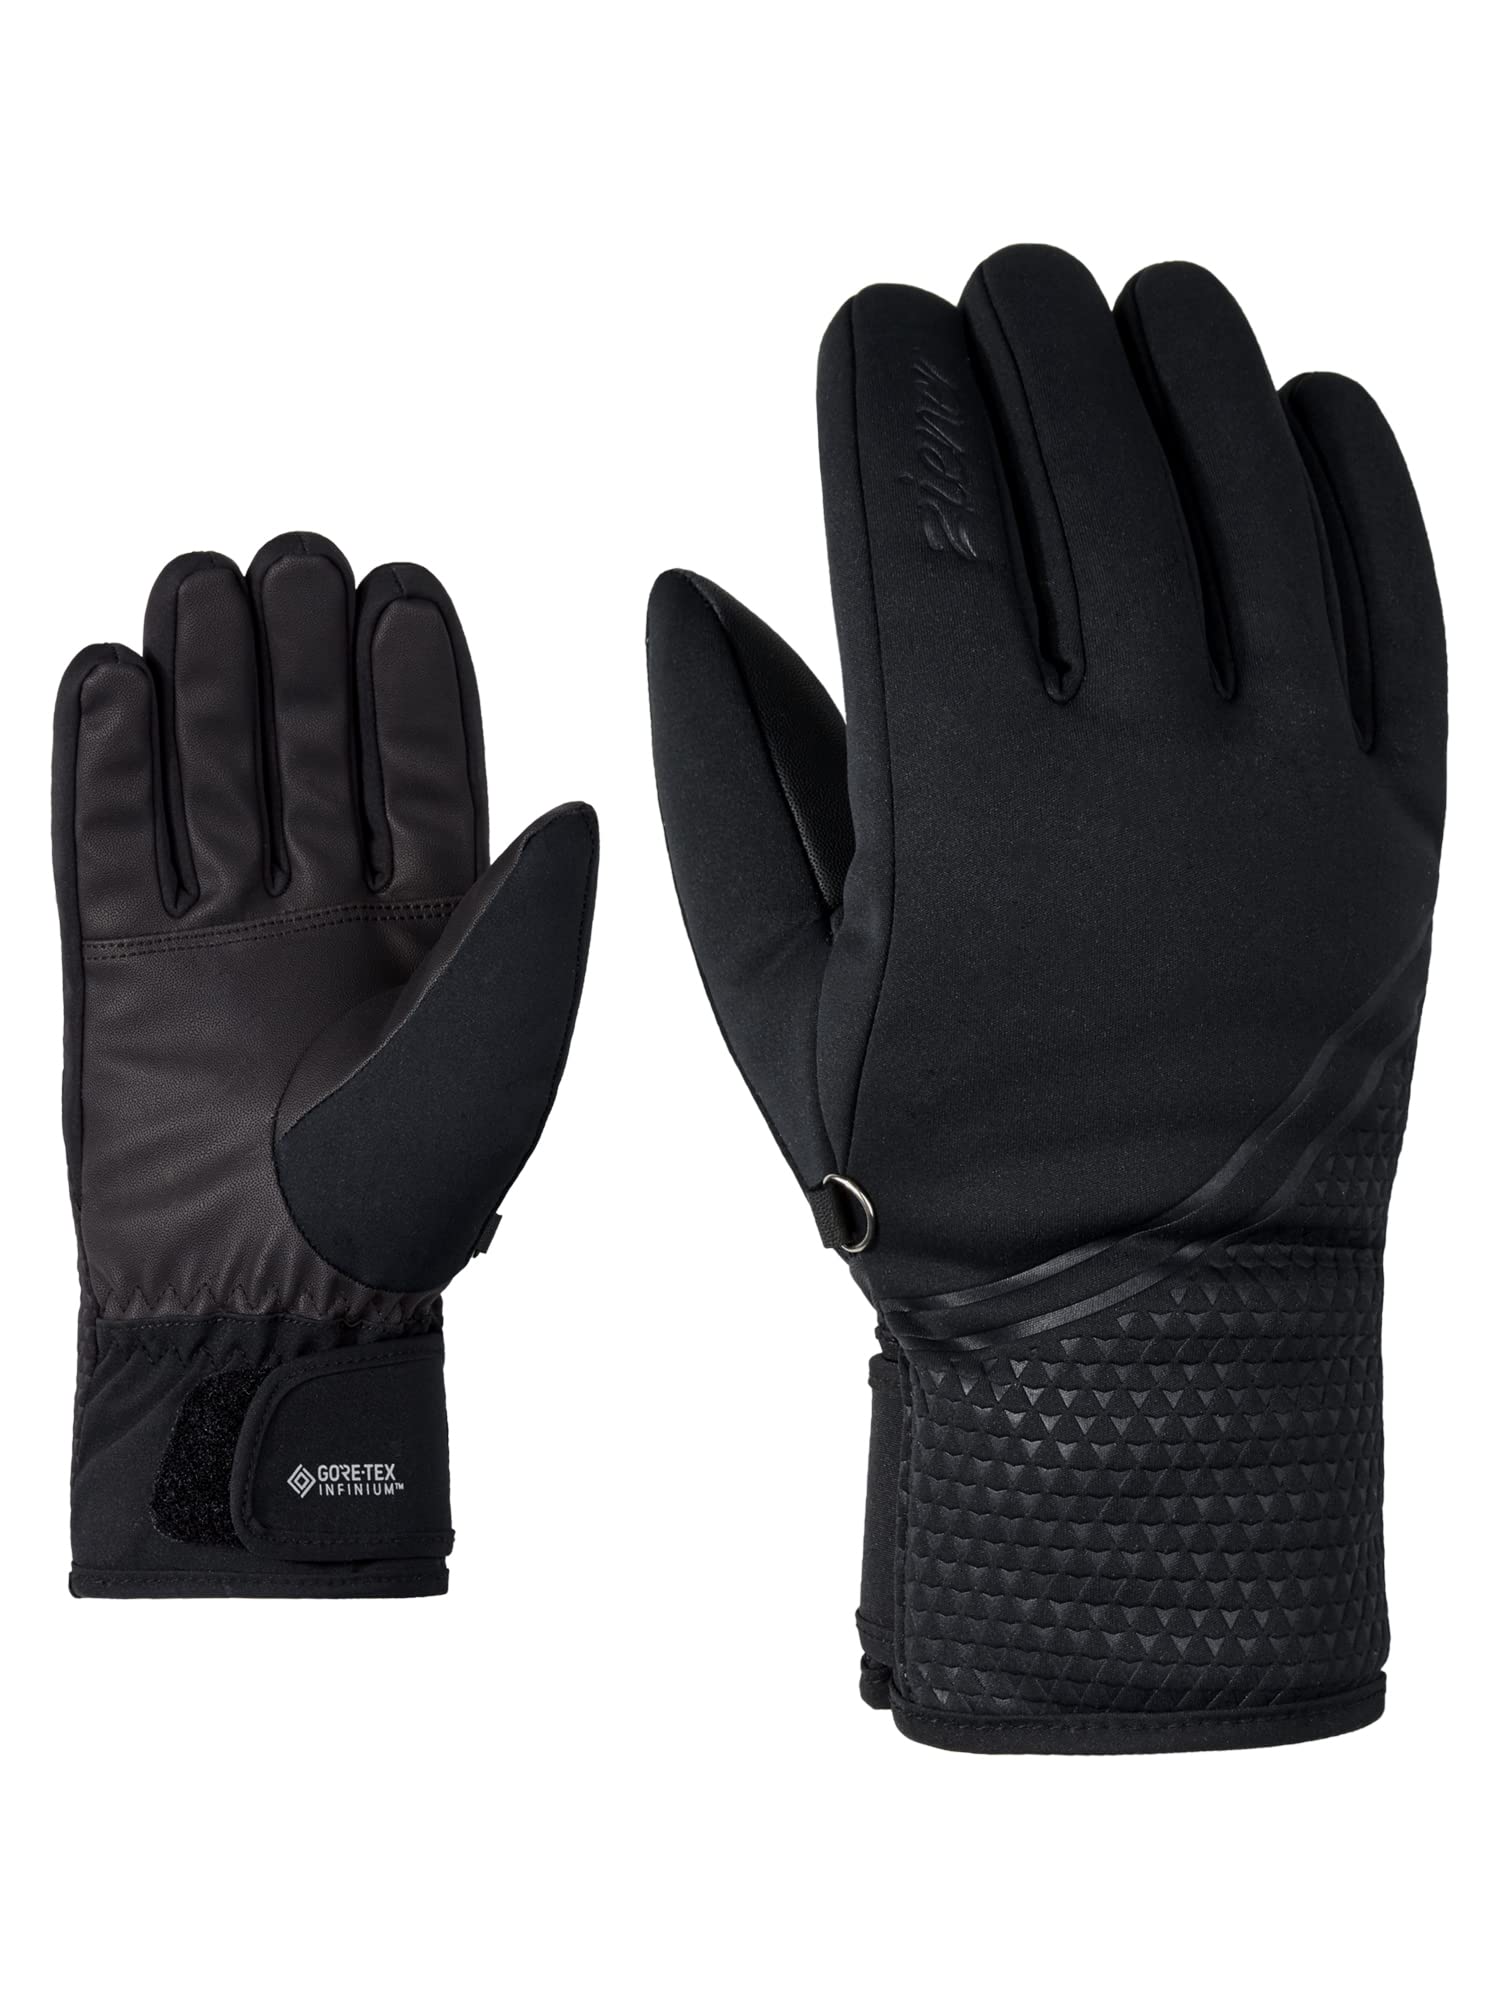 Ziener Damen Kanta GTX INF Ski-Handschuhe/Wintersport | Atmungsaktiv, Warm, Winddicht, Soft-Shell, Black, 6,5